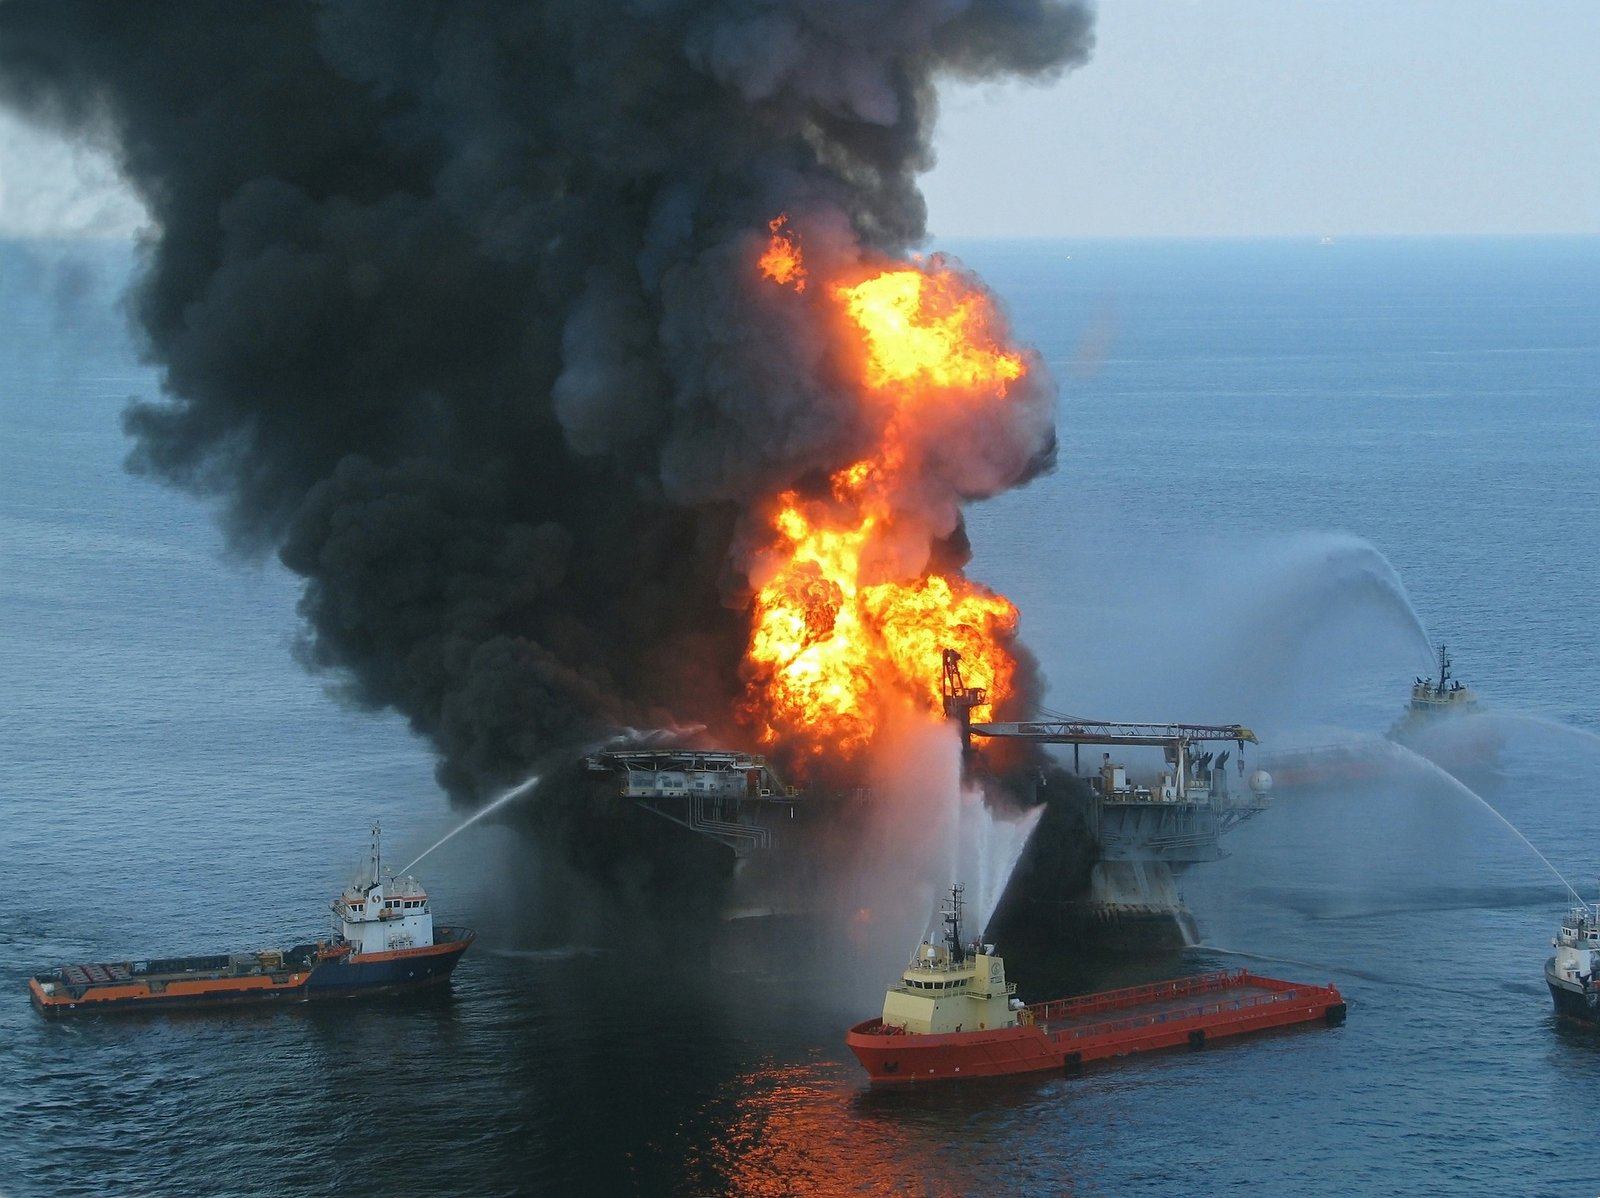 Oil rig explosion - oil spill